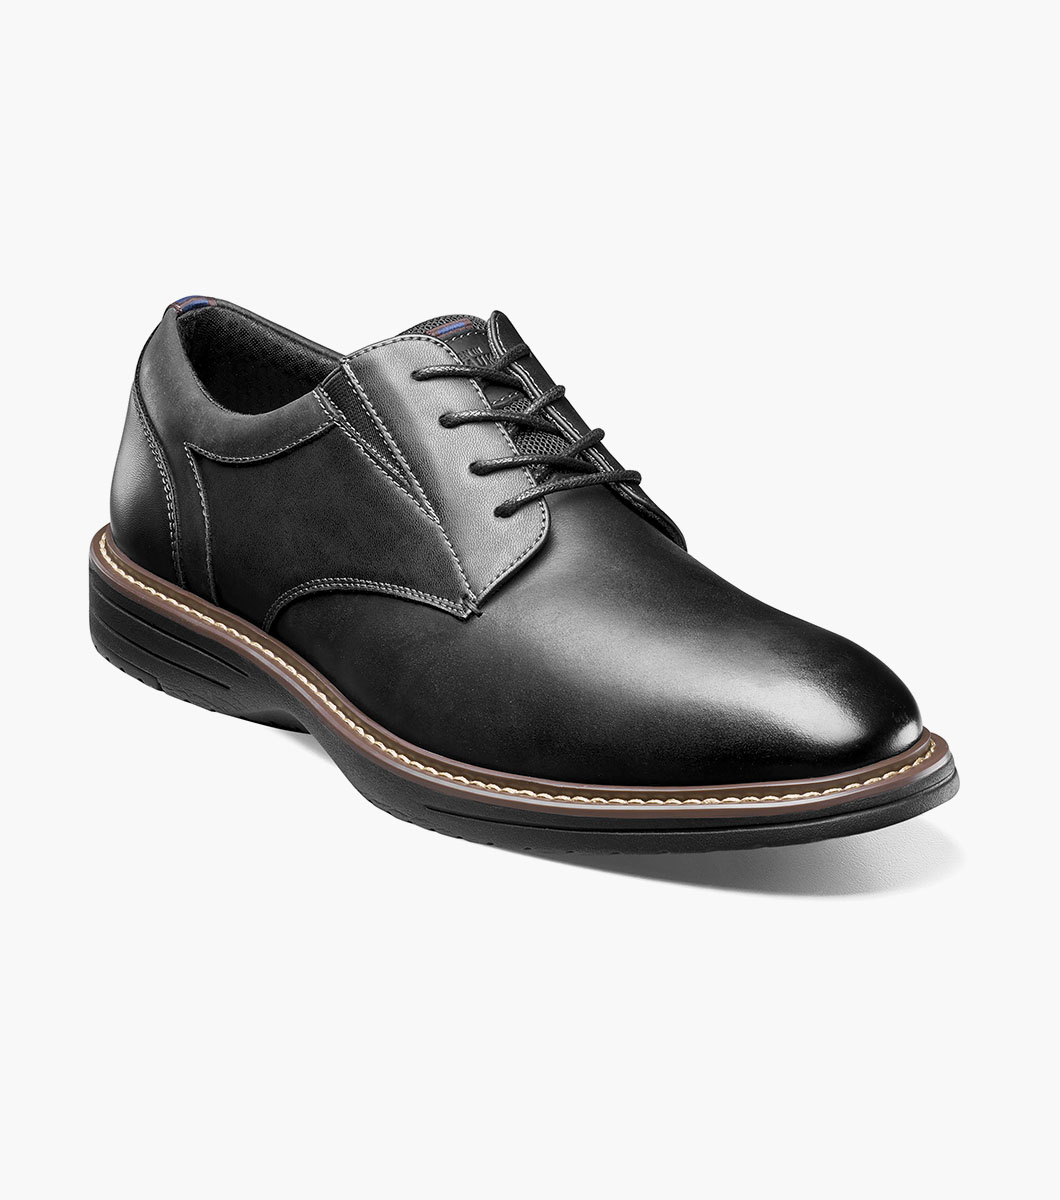 Nunn Bush Shoes Griff Plain Toe Oxford Black Size 10